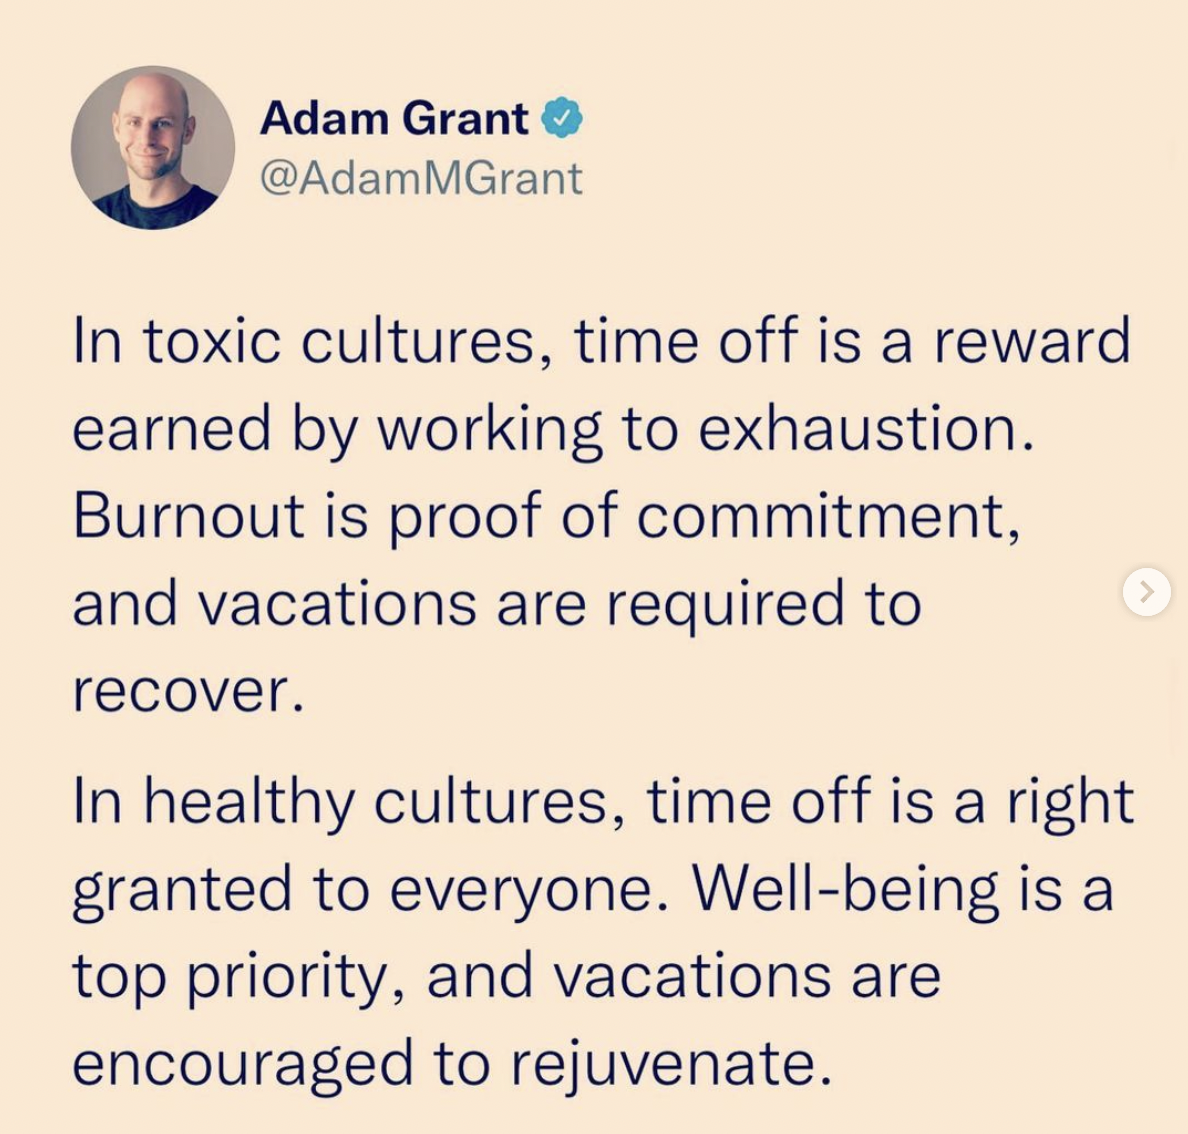 Tweet by Adam Grant about quiet quitting